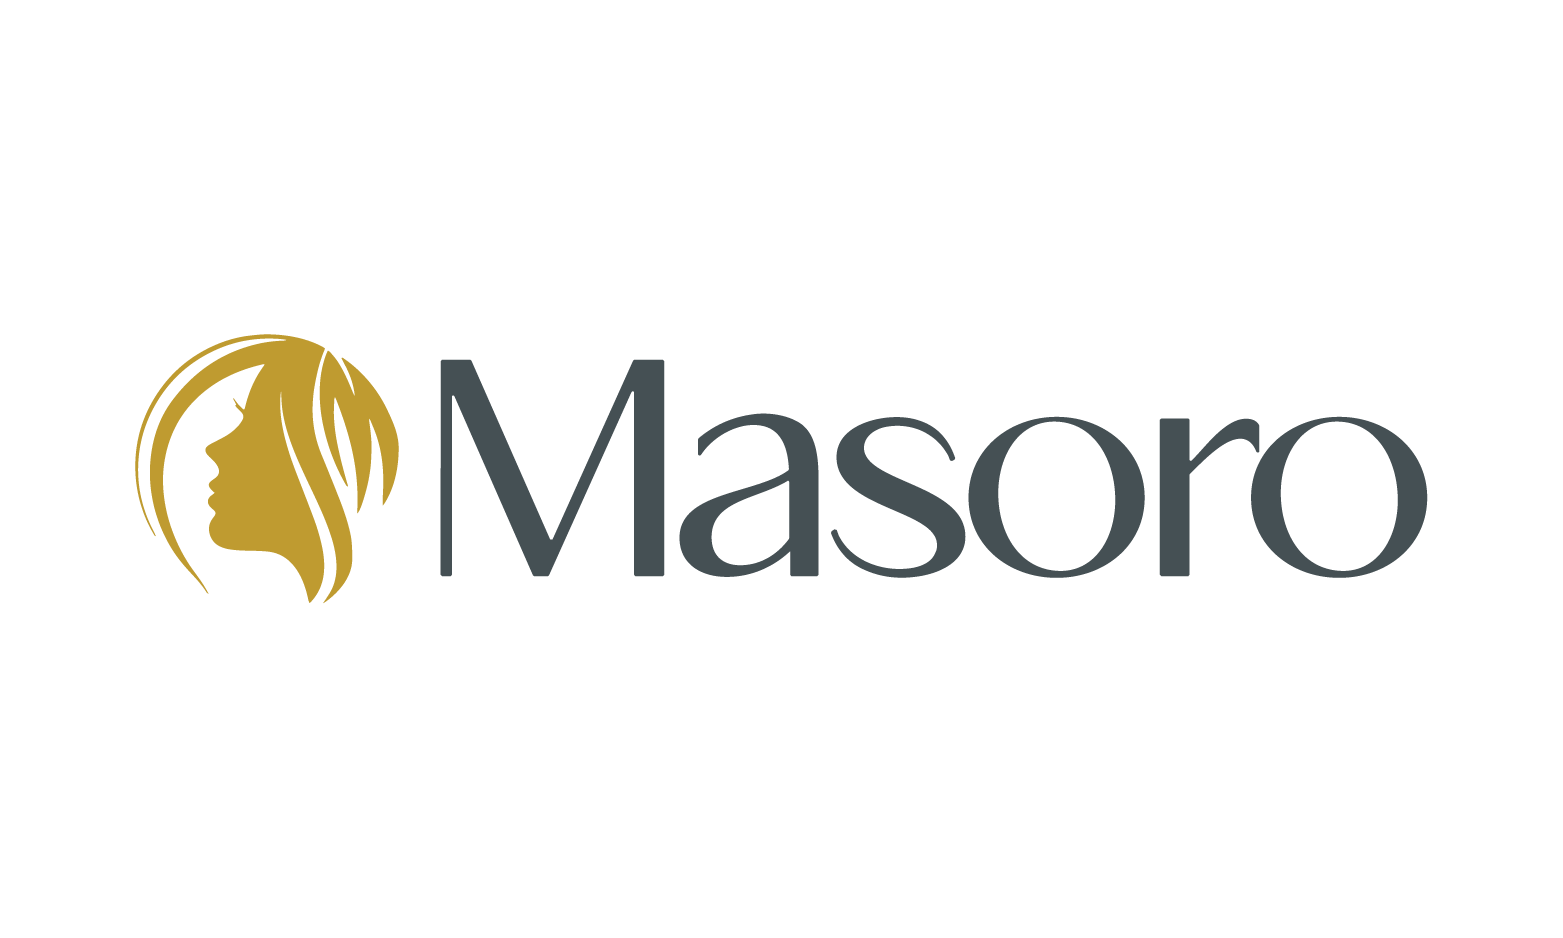 Masoro.com - Creative brandable domain for sale